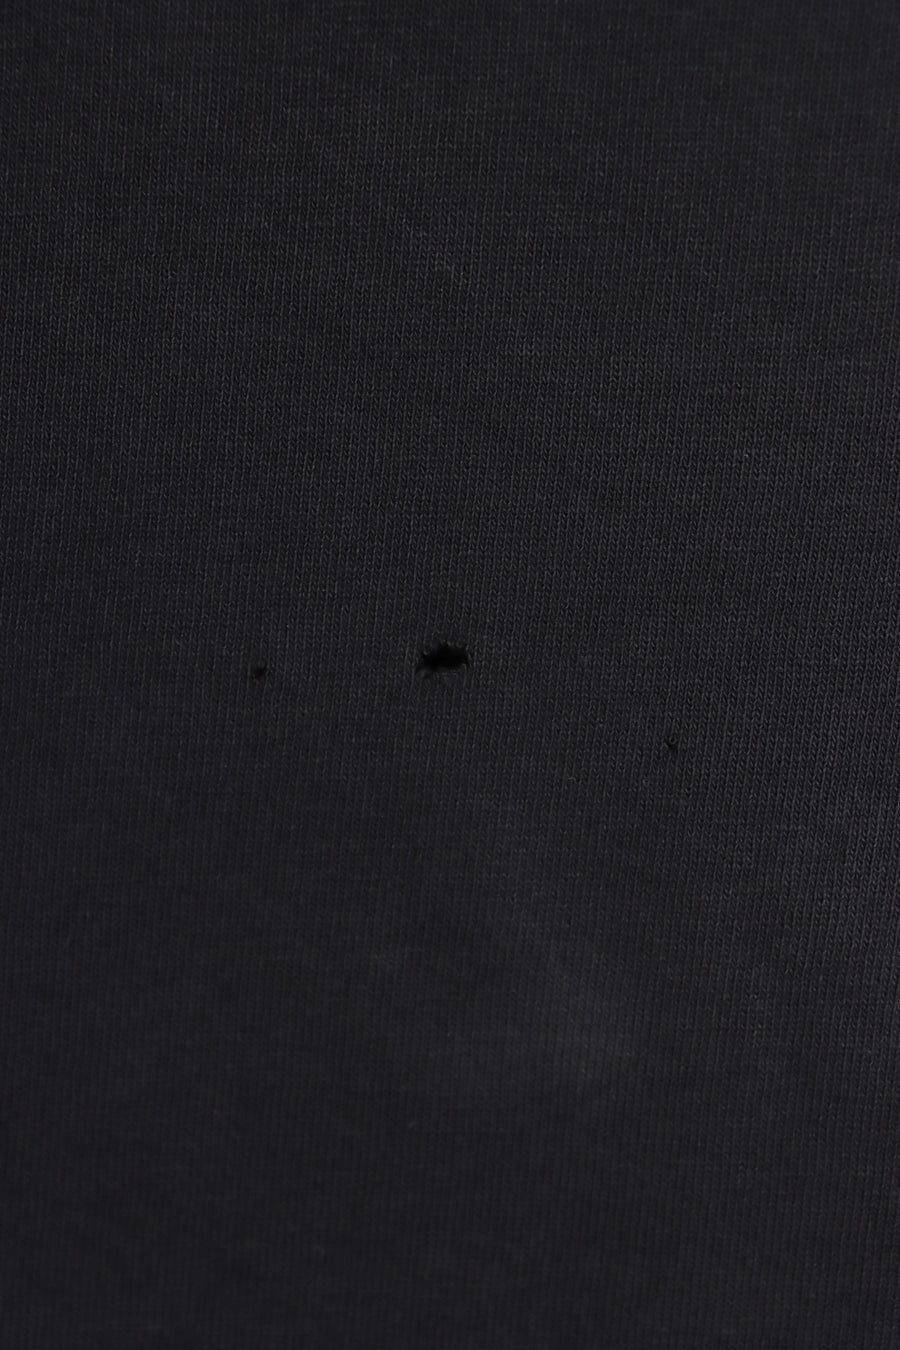 Toadies Band Rubberneck "I Burn" Front Back Single Stitch T-Shirt USA Made (XL)